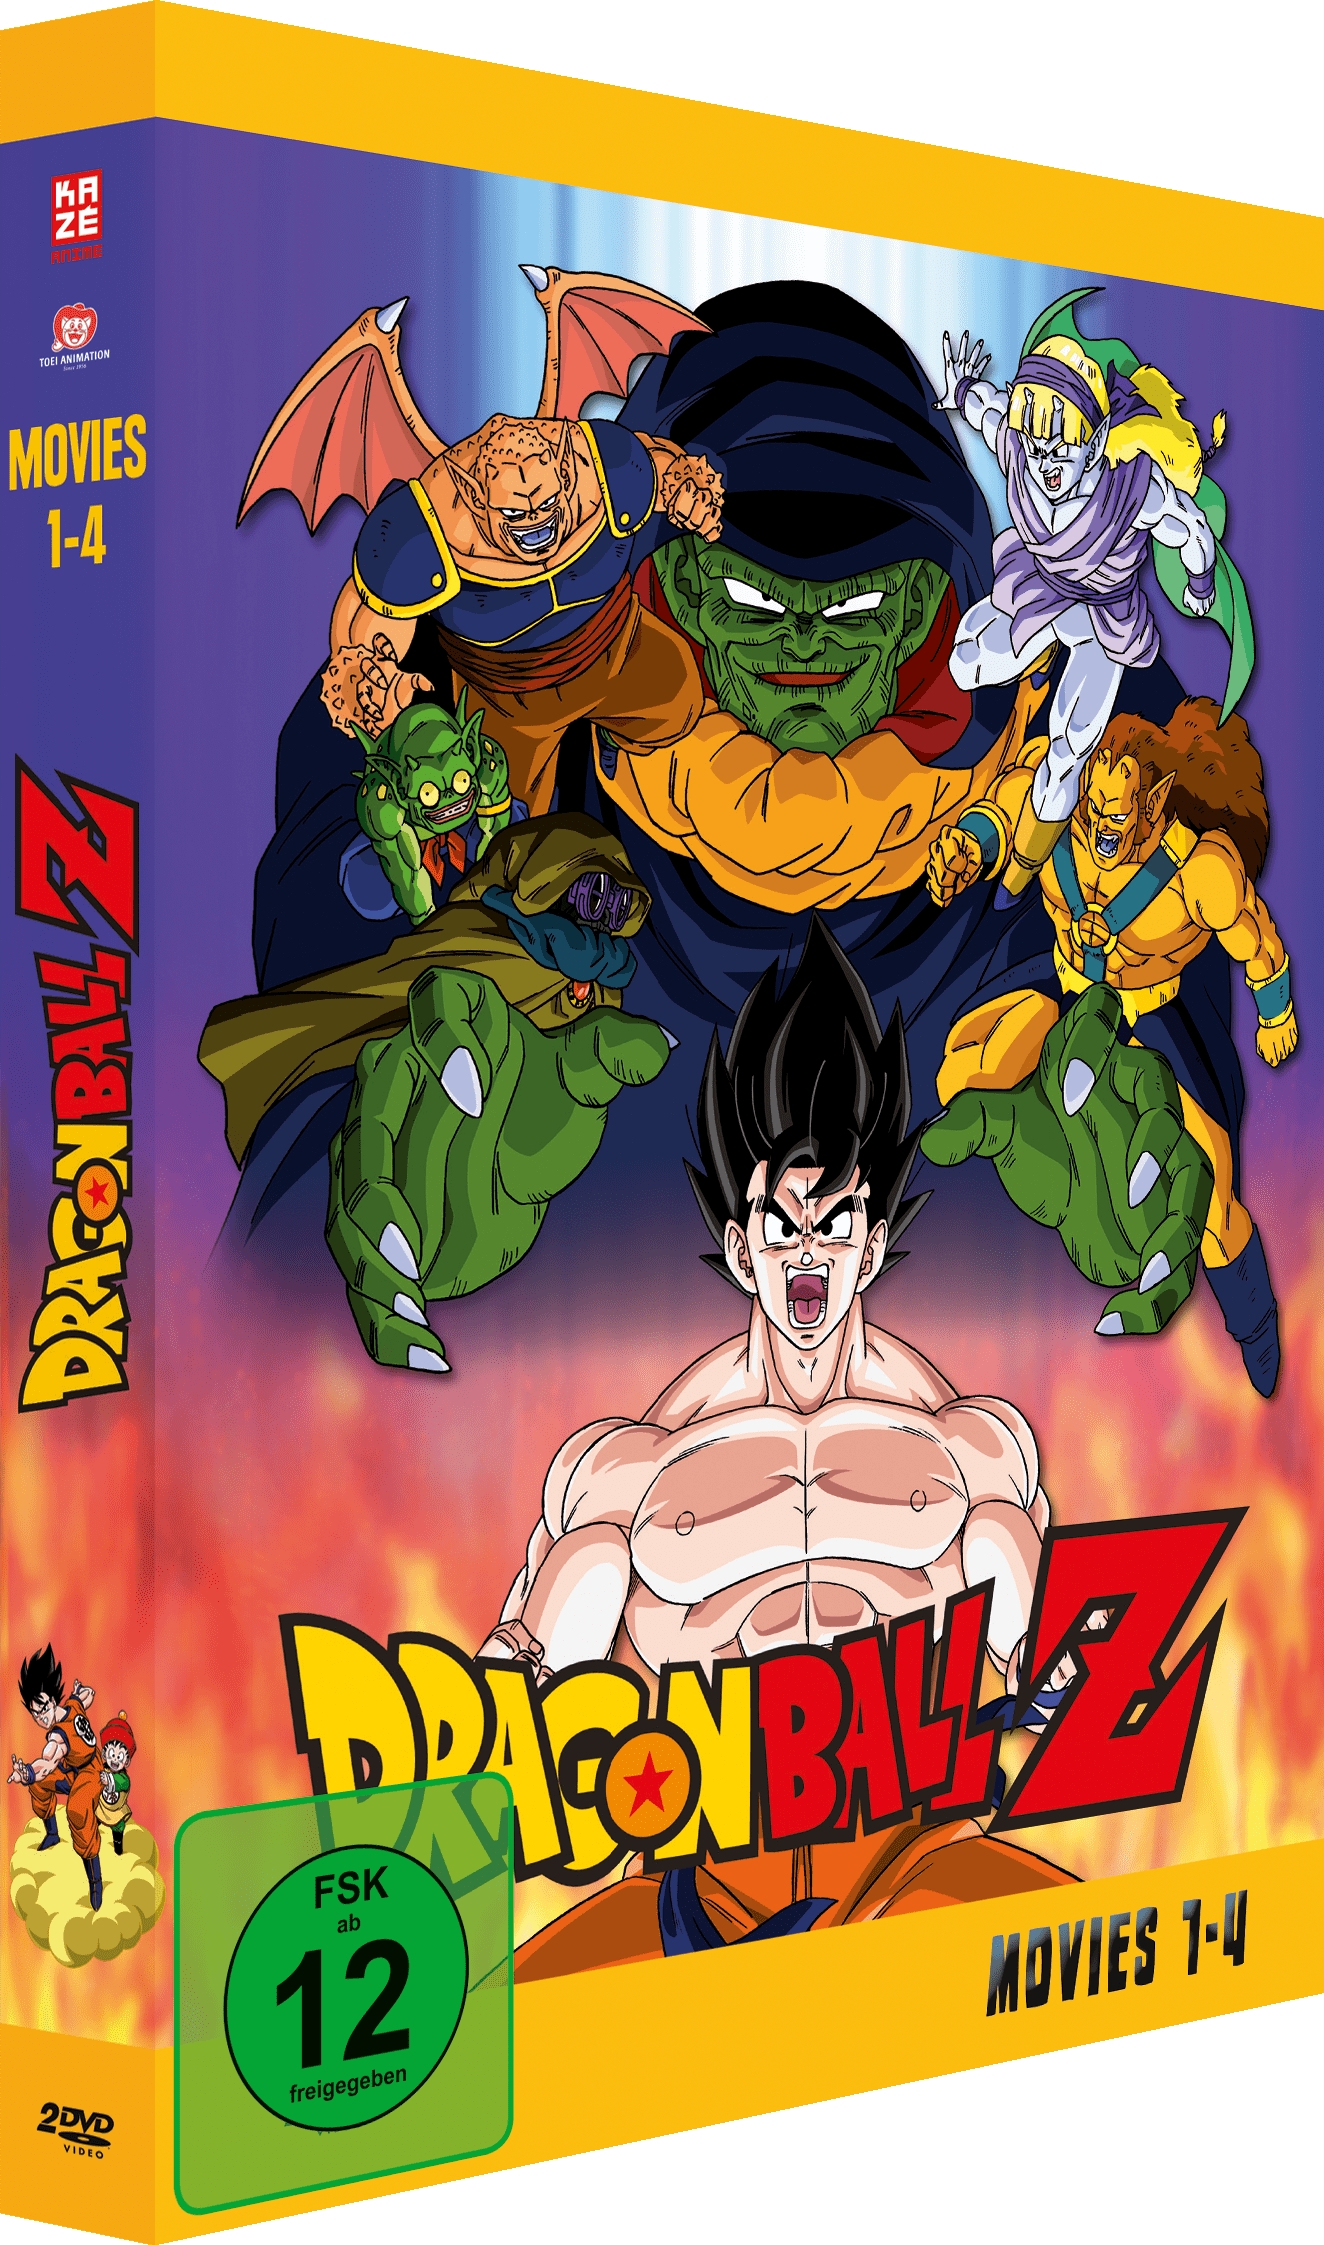 Dragonball Z - Movies 1-4 - Box 1 - DVD